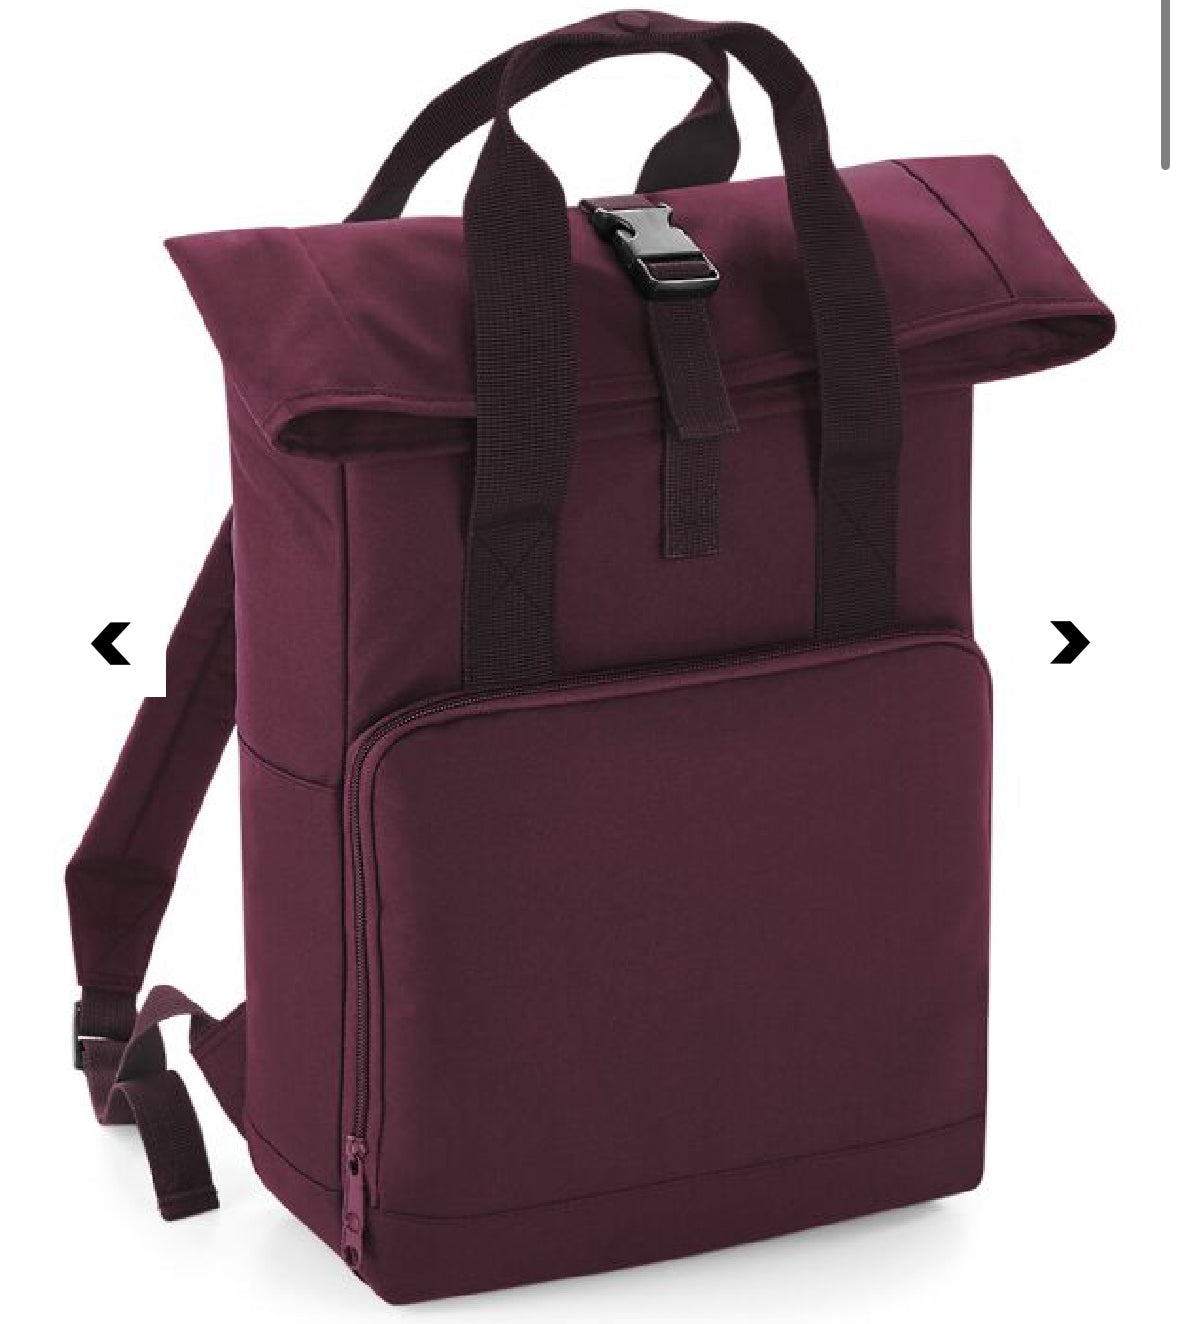 Custom order for Lindsey - Stoopid Chickie embroidered Backpack